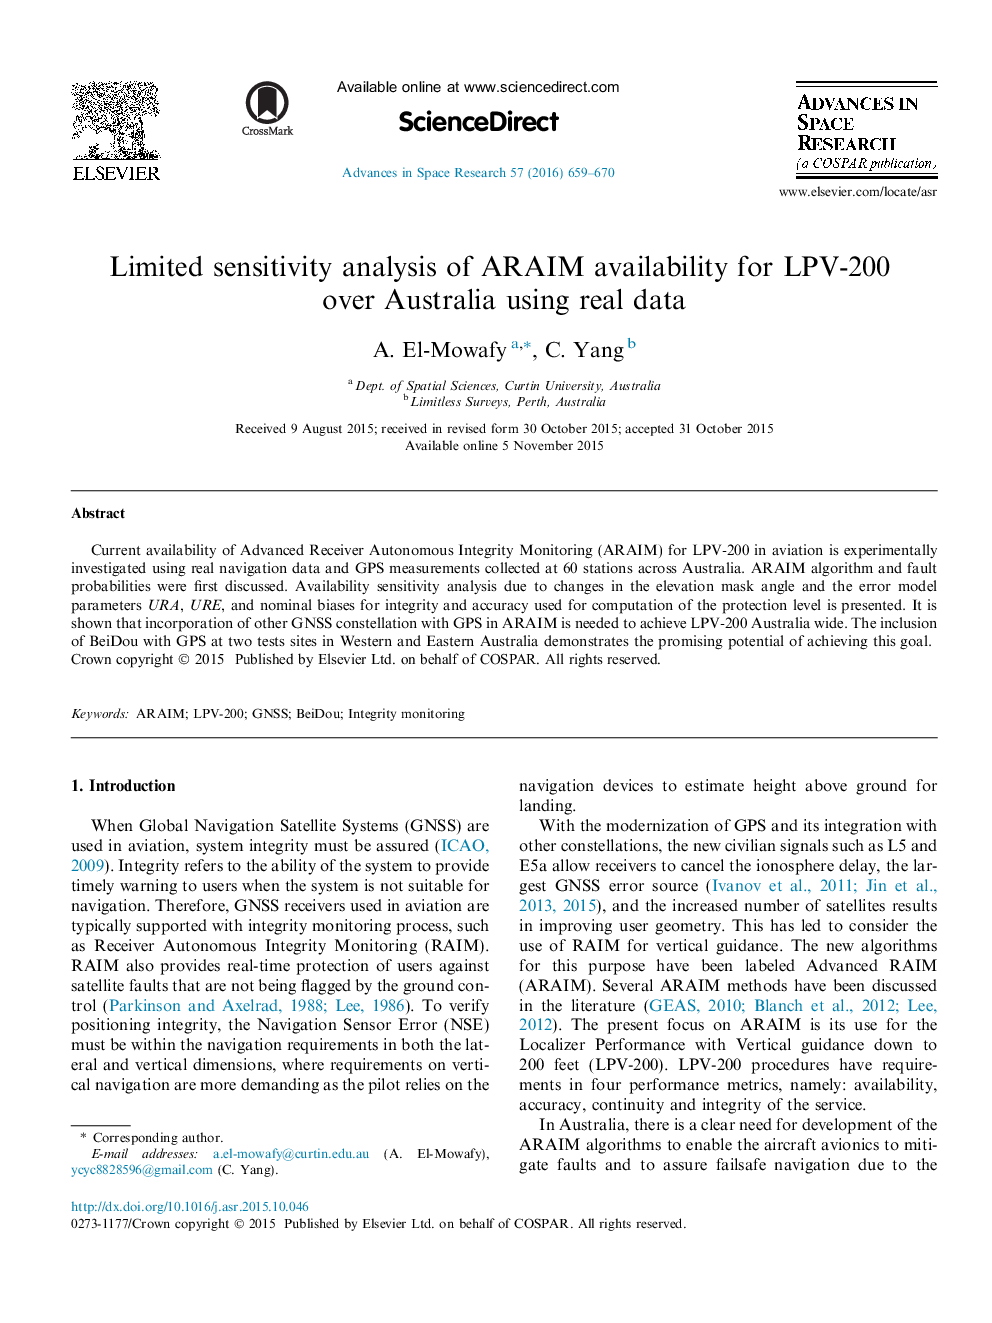 Limited sensitivity analysis of ARAIM availability for LPV-200 over Australia using real data